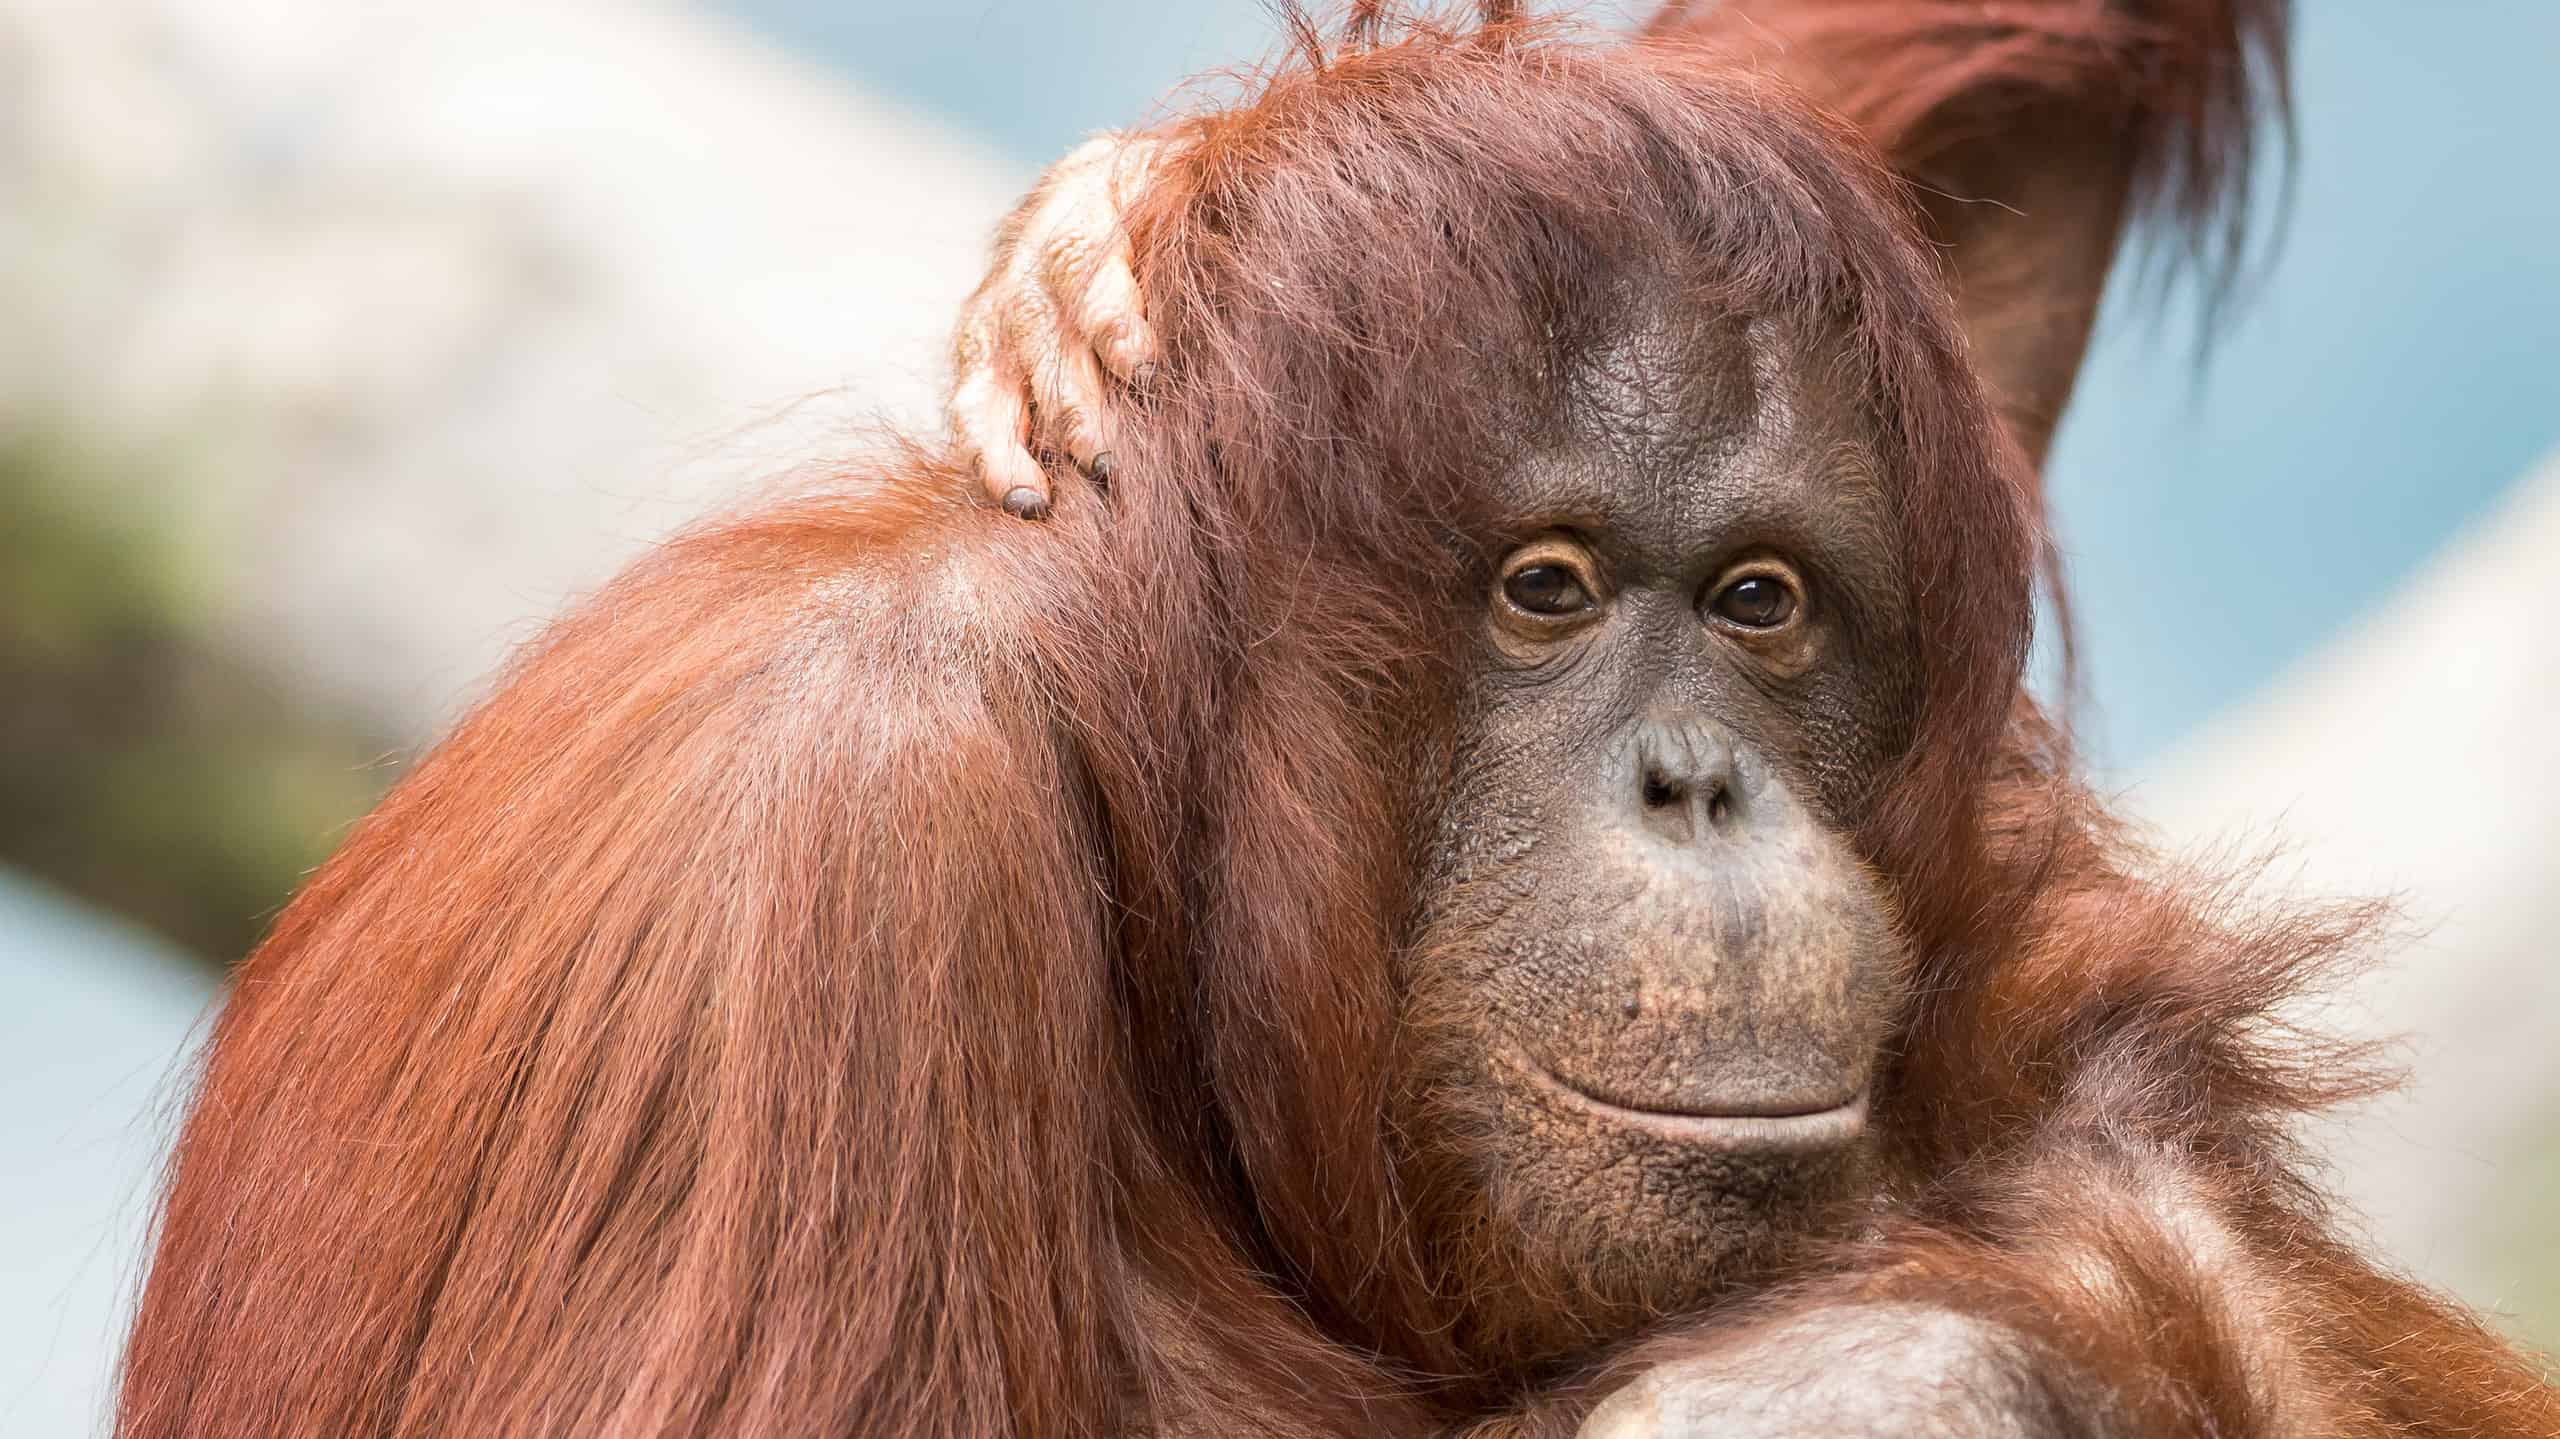 Orangutan nursing with its mother (Pongo pygmaeus)